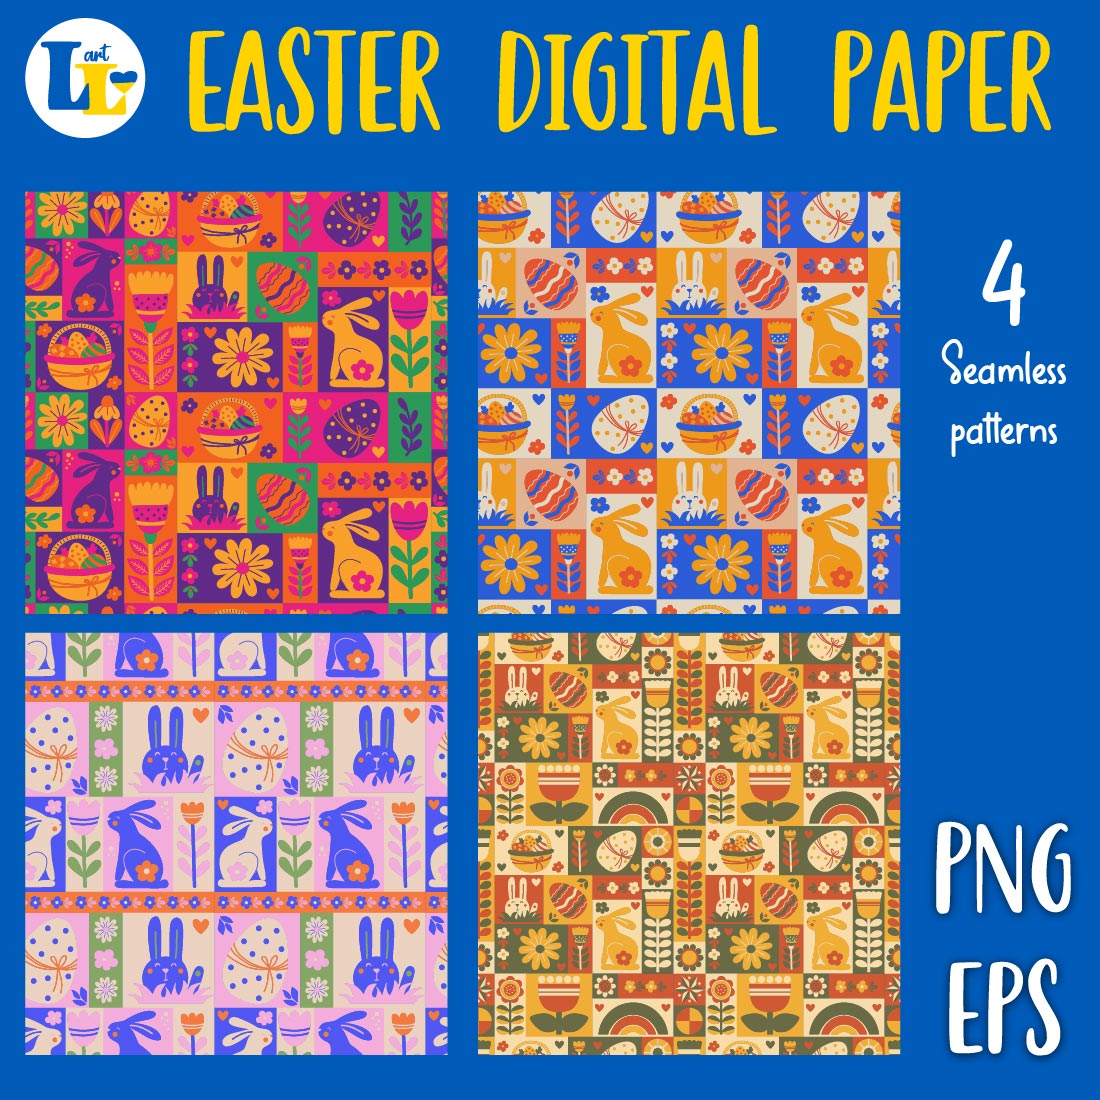 Easter seamless pattern groovy background| Designer Digital Paper Pack cover image.